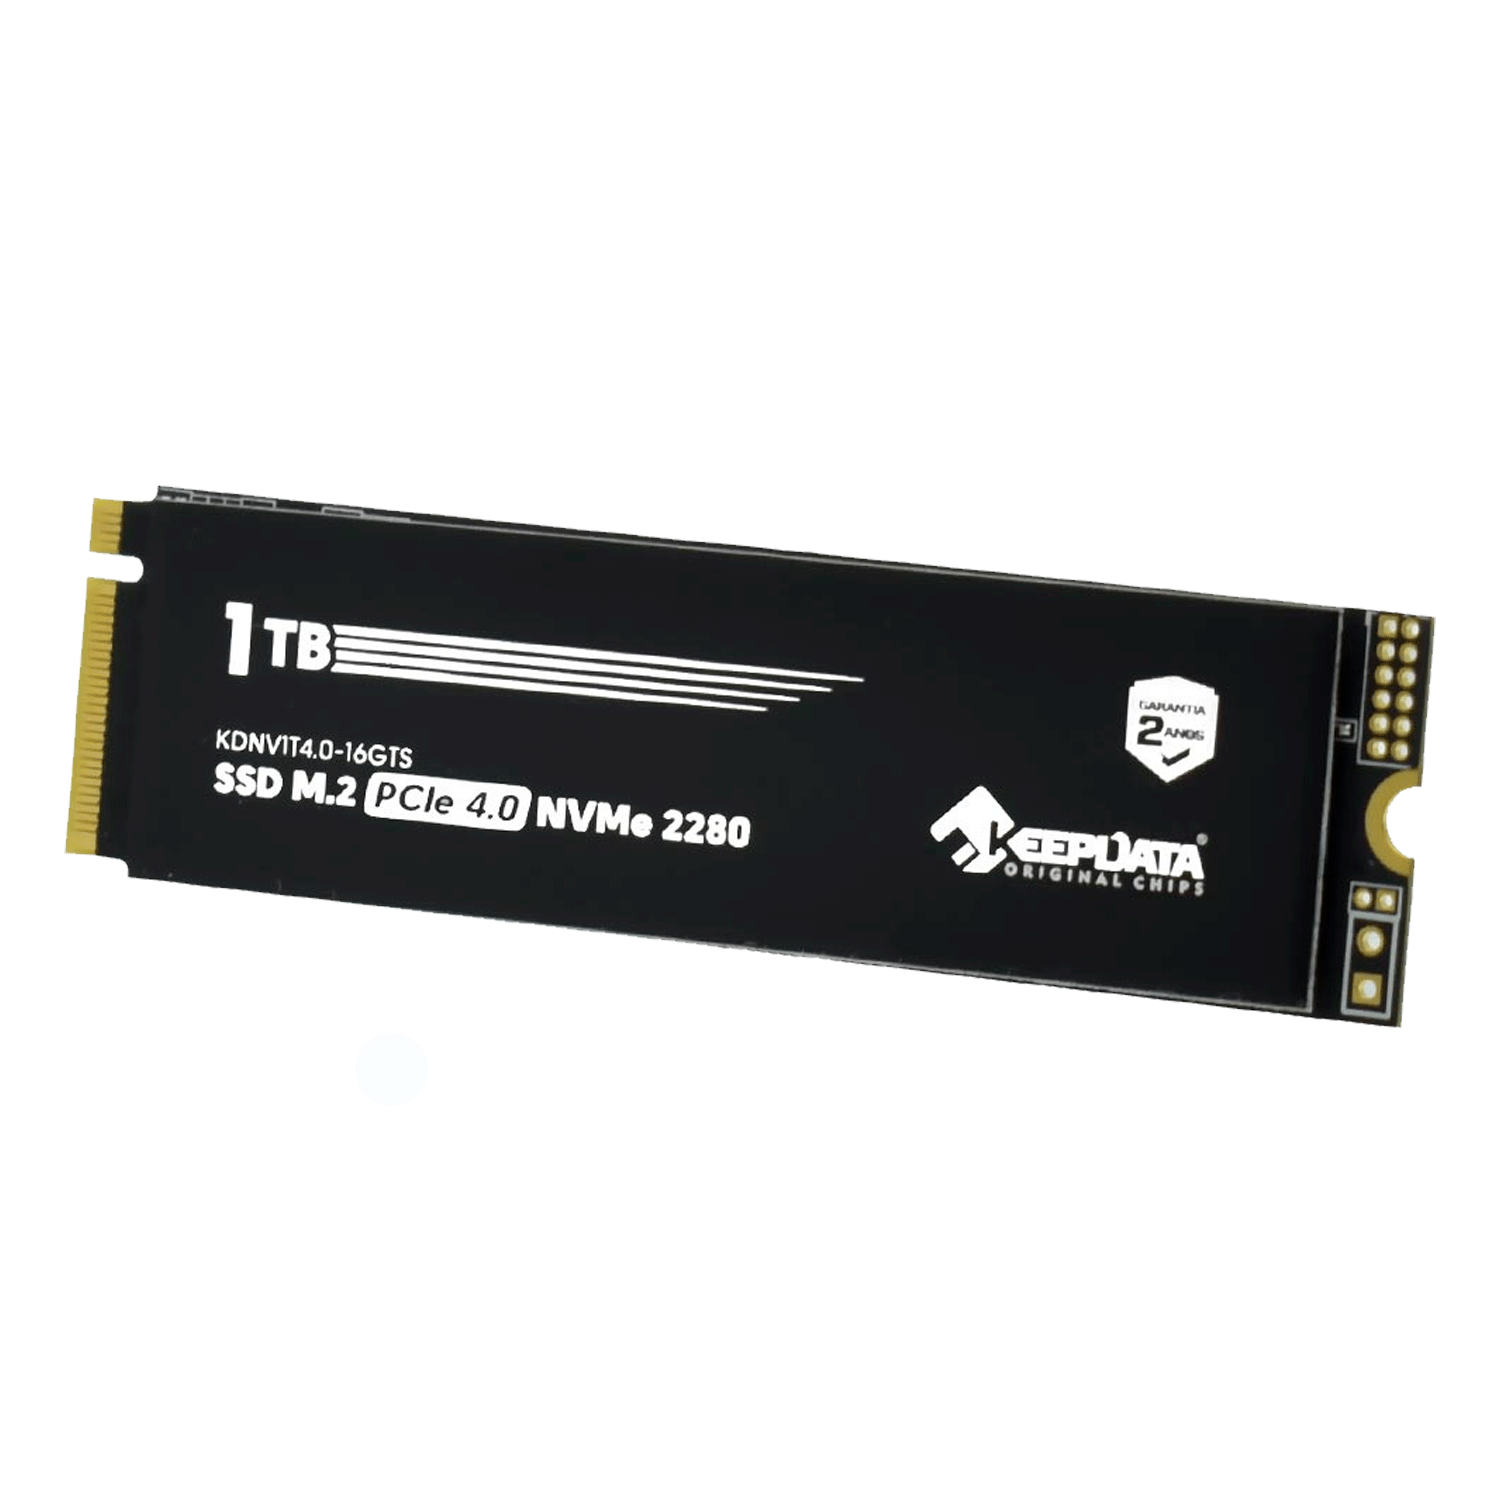 SSD M.2 Keepdata 1TB NVMe PCIe 4.0 - KDNV1T4.0-16GTS